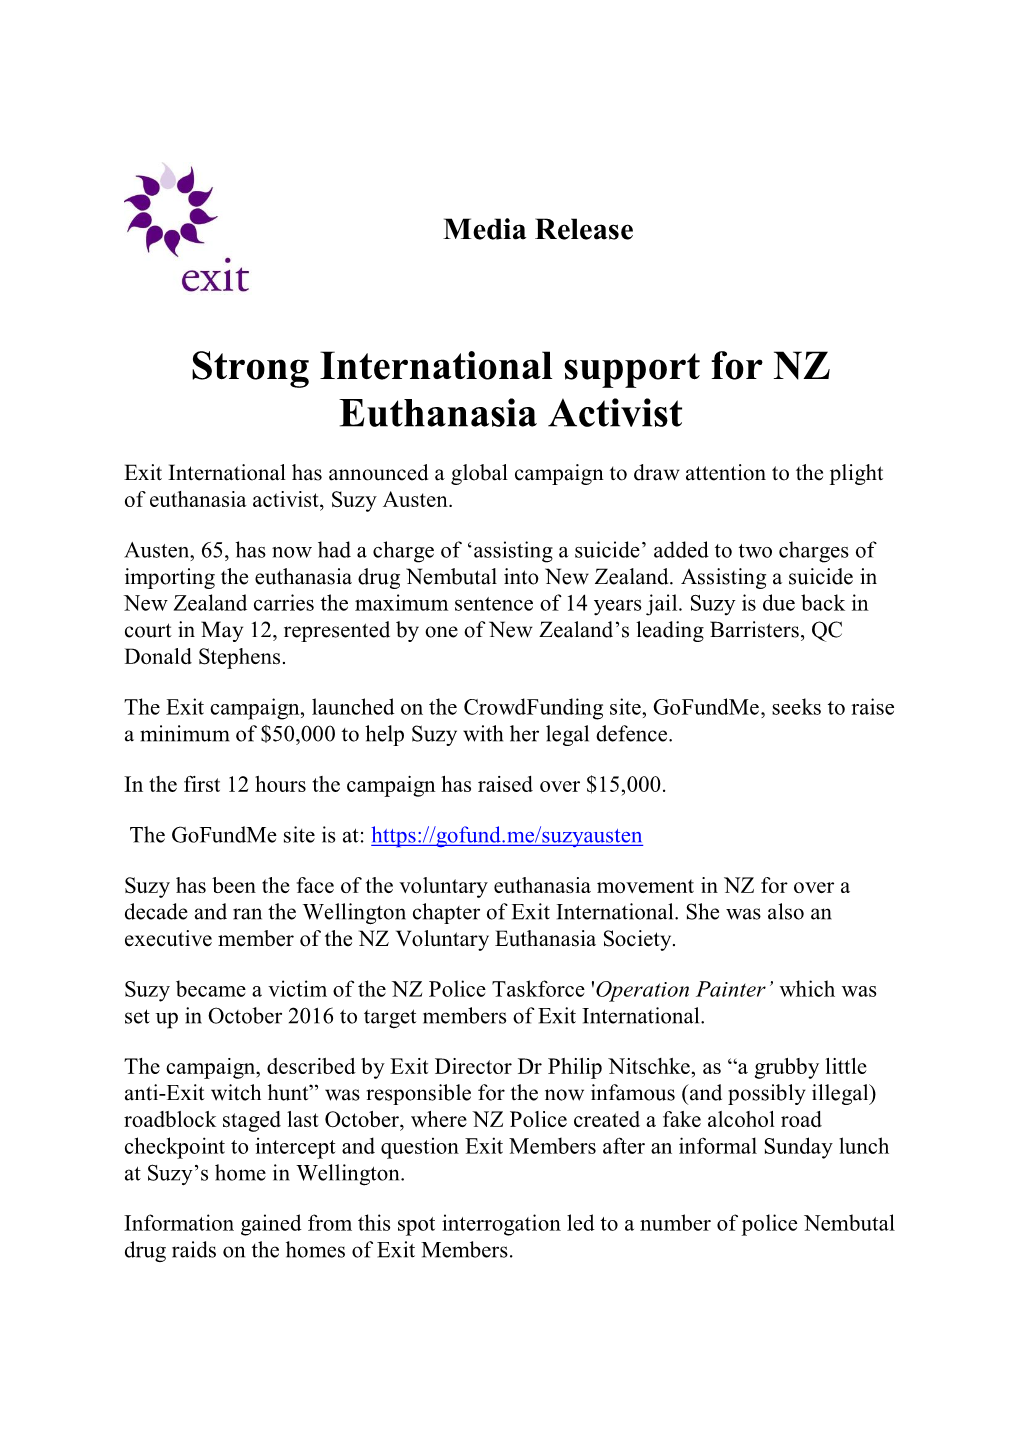 Strong International Support for NZ Euthanasia Activist